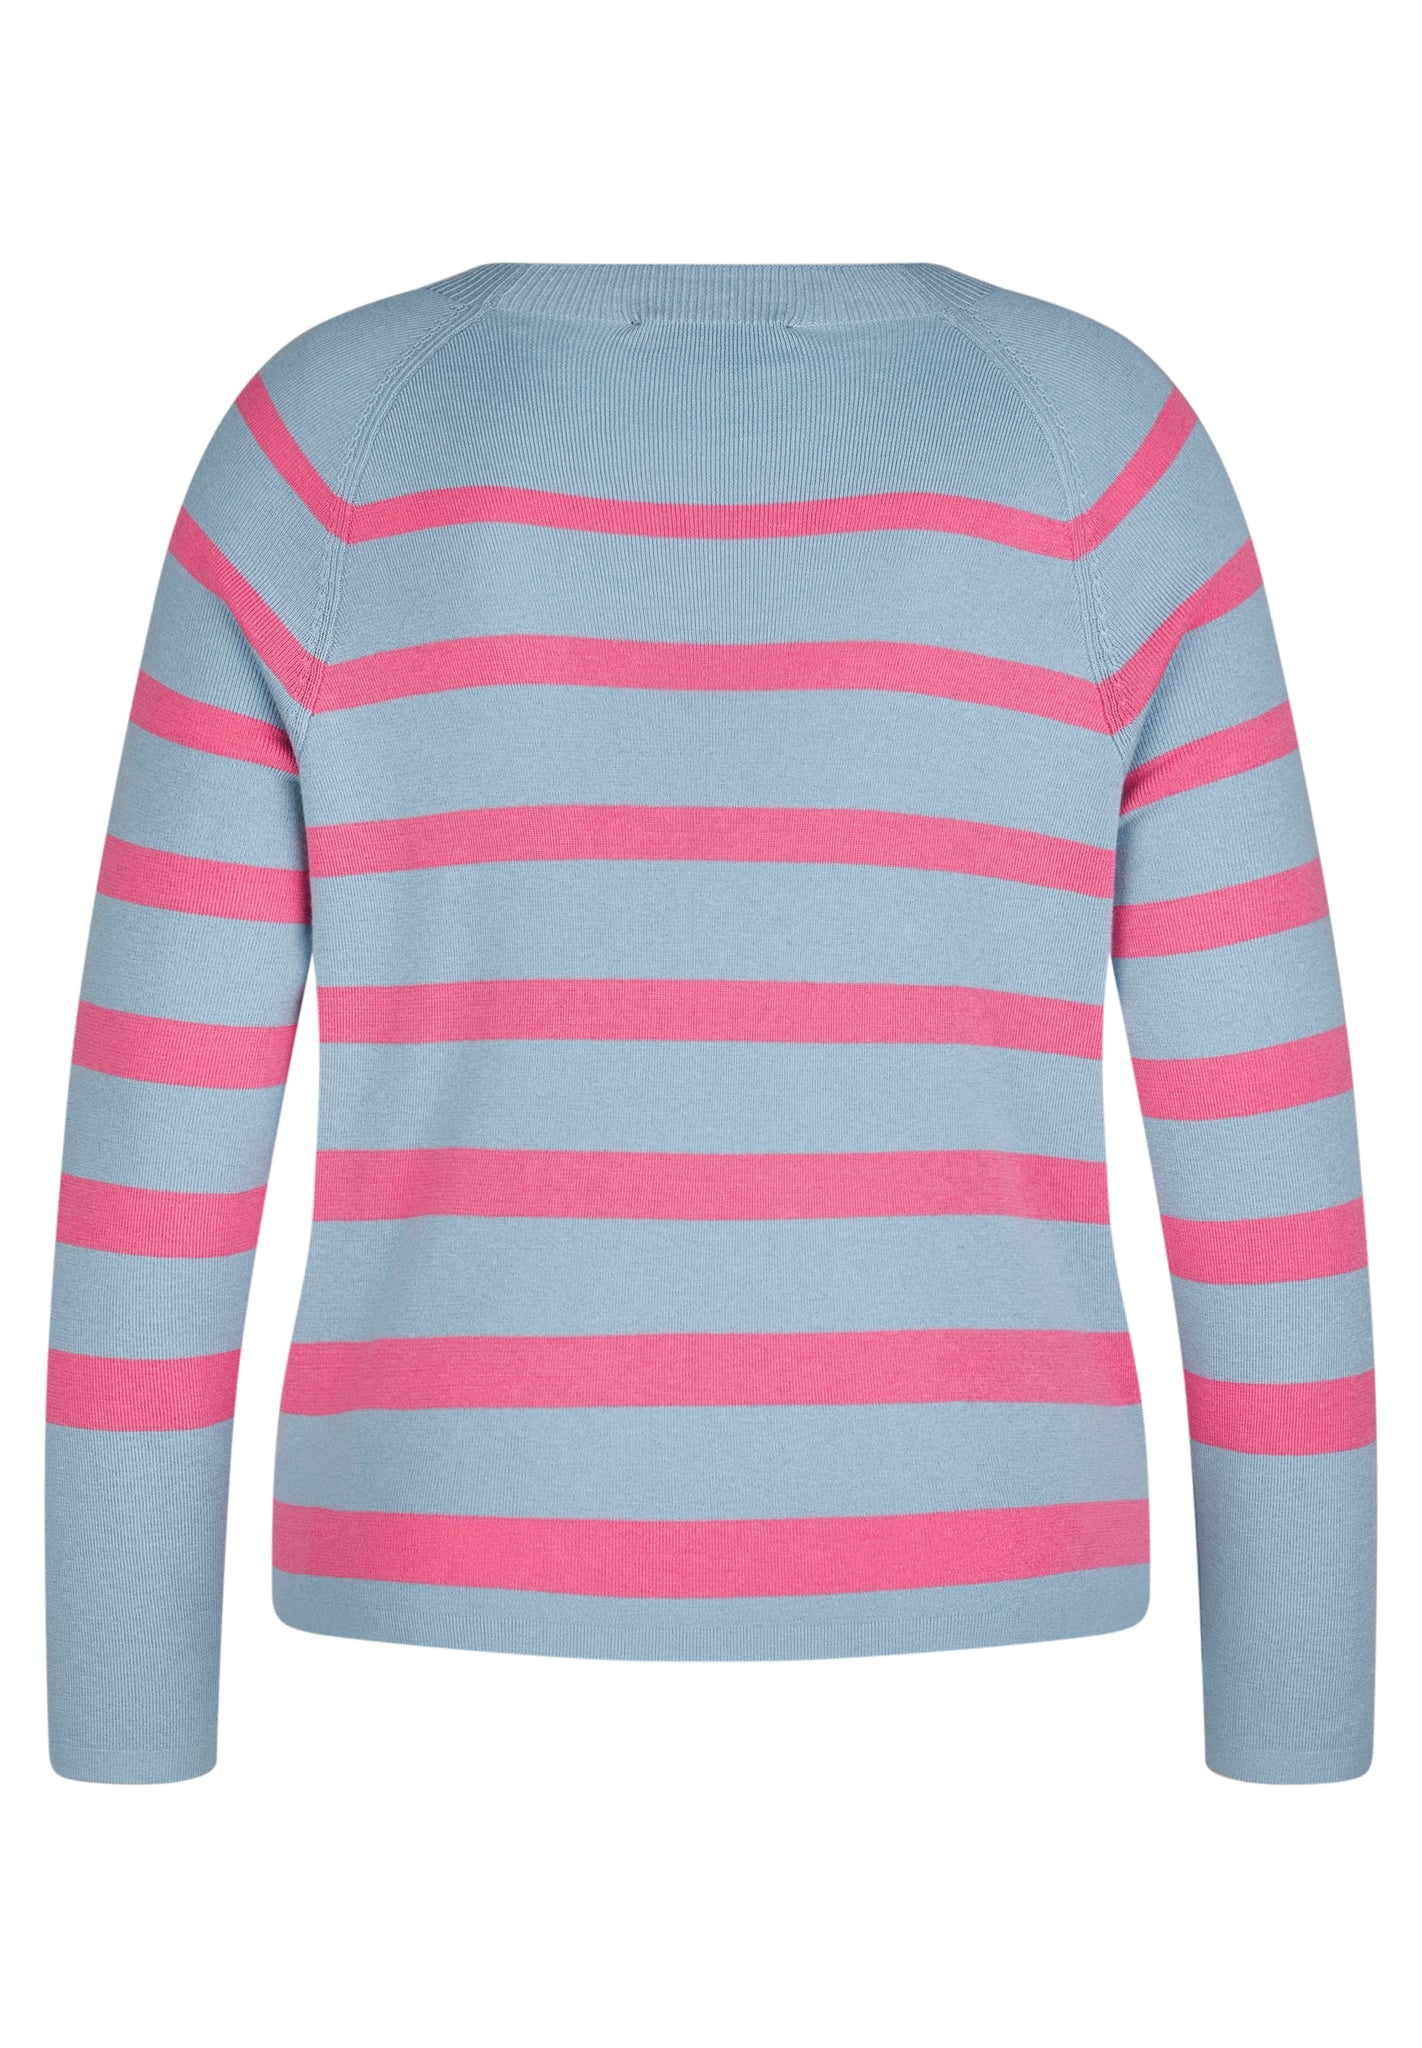 Colour splash stripe jumper